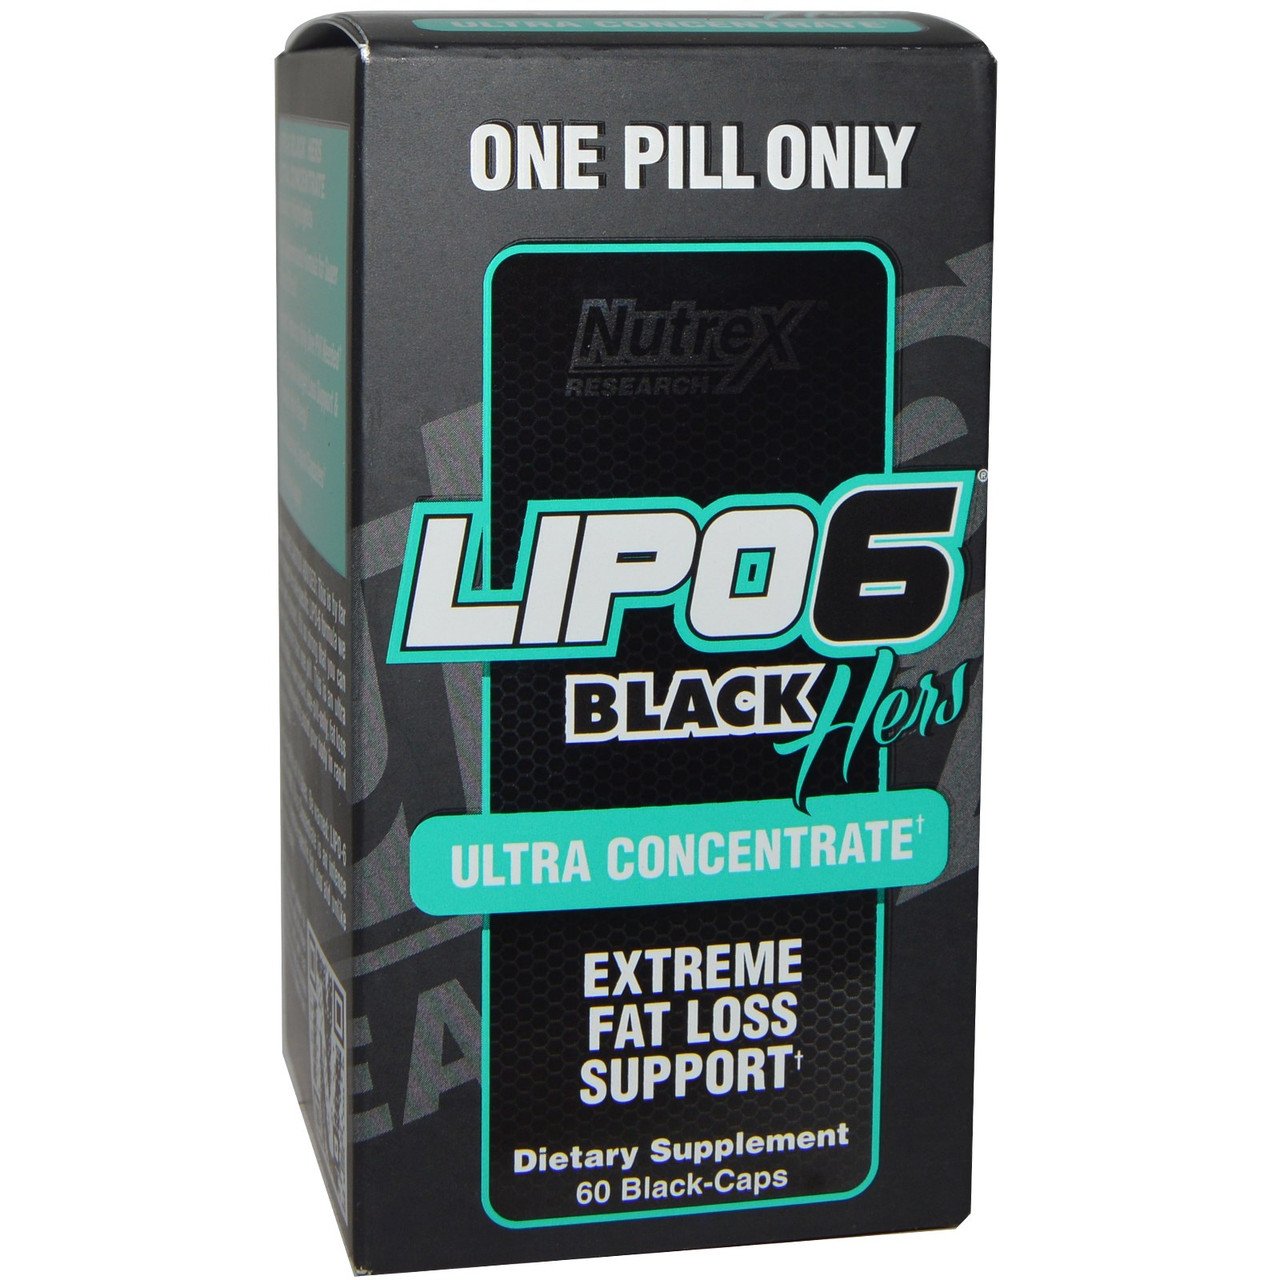 Lipo-6 Black Hers Ultra Concentrate Nutrex 60 Black-Caps ,  мл, Nutrex Research. Жиросжигатель. Снижение веса Сжигание жира 